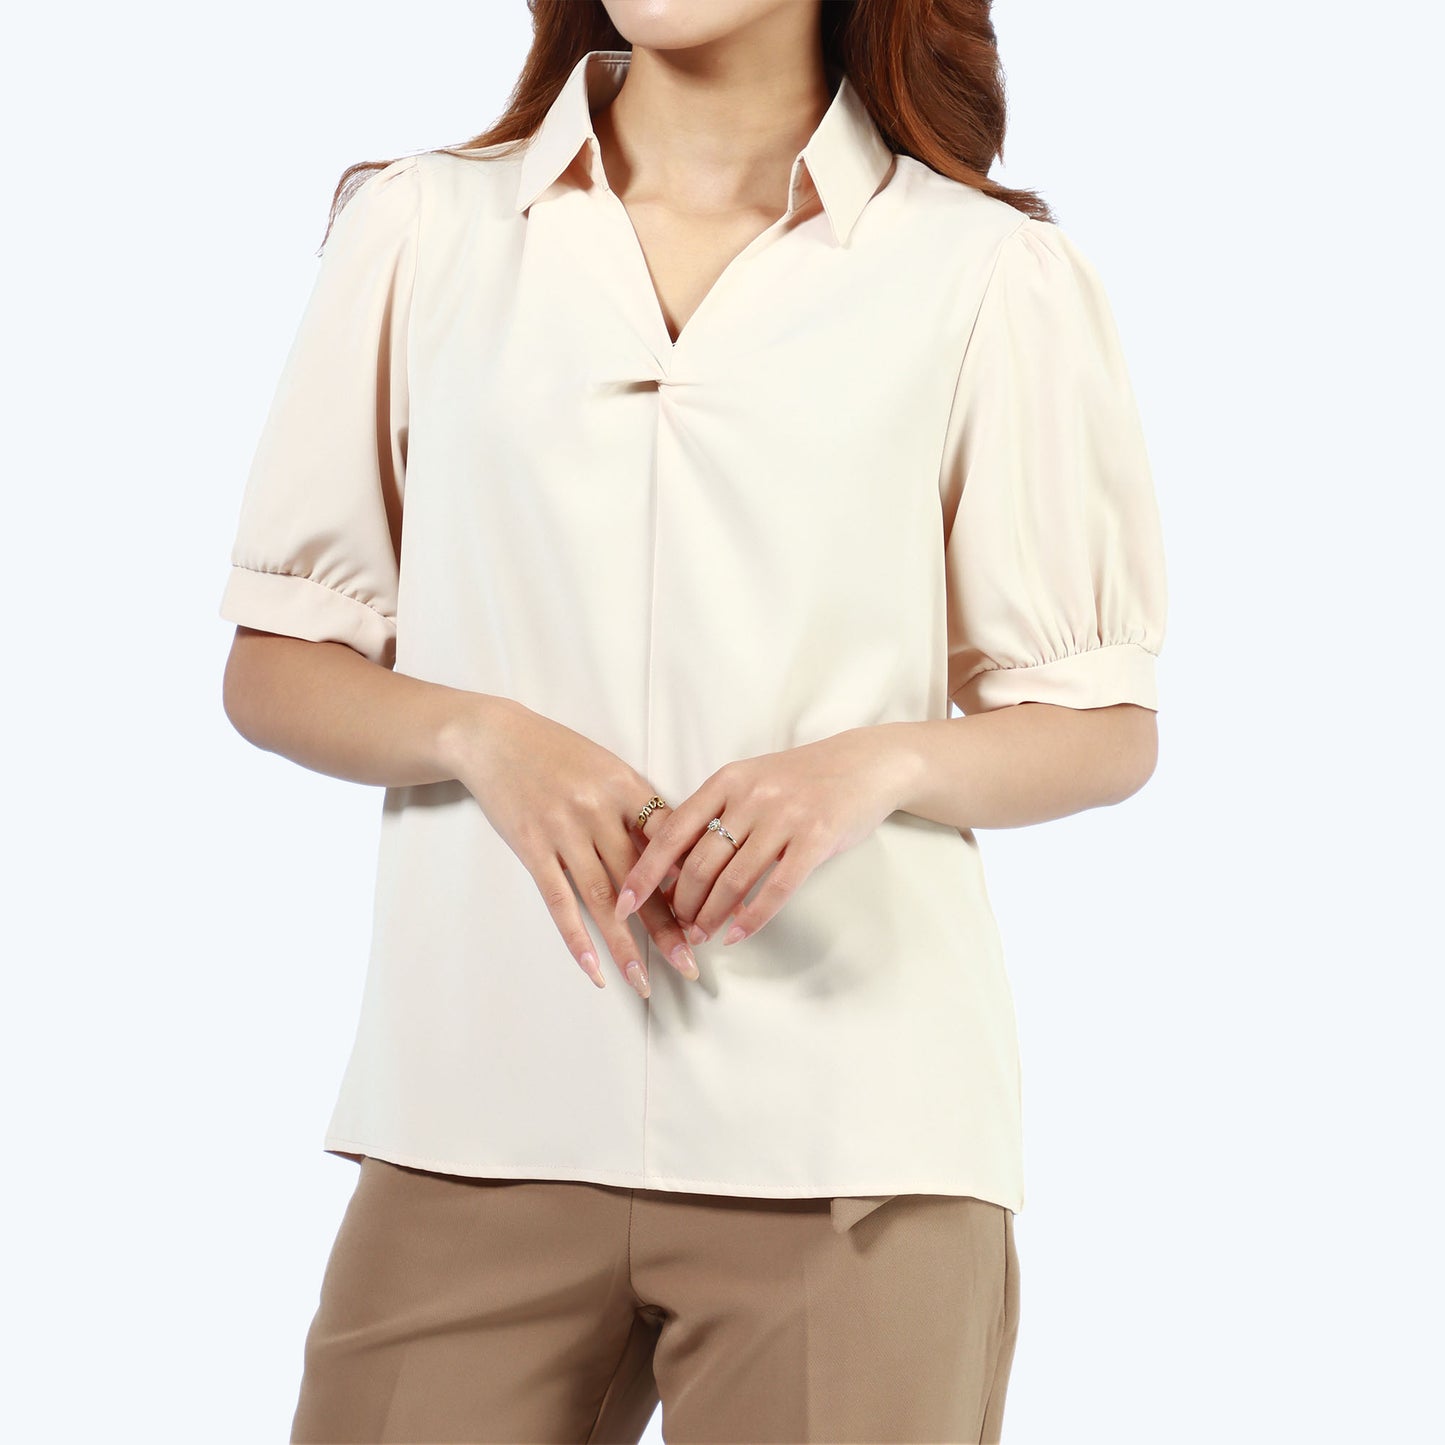 Half Sleeve Semi Formal T-shirt With Collar